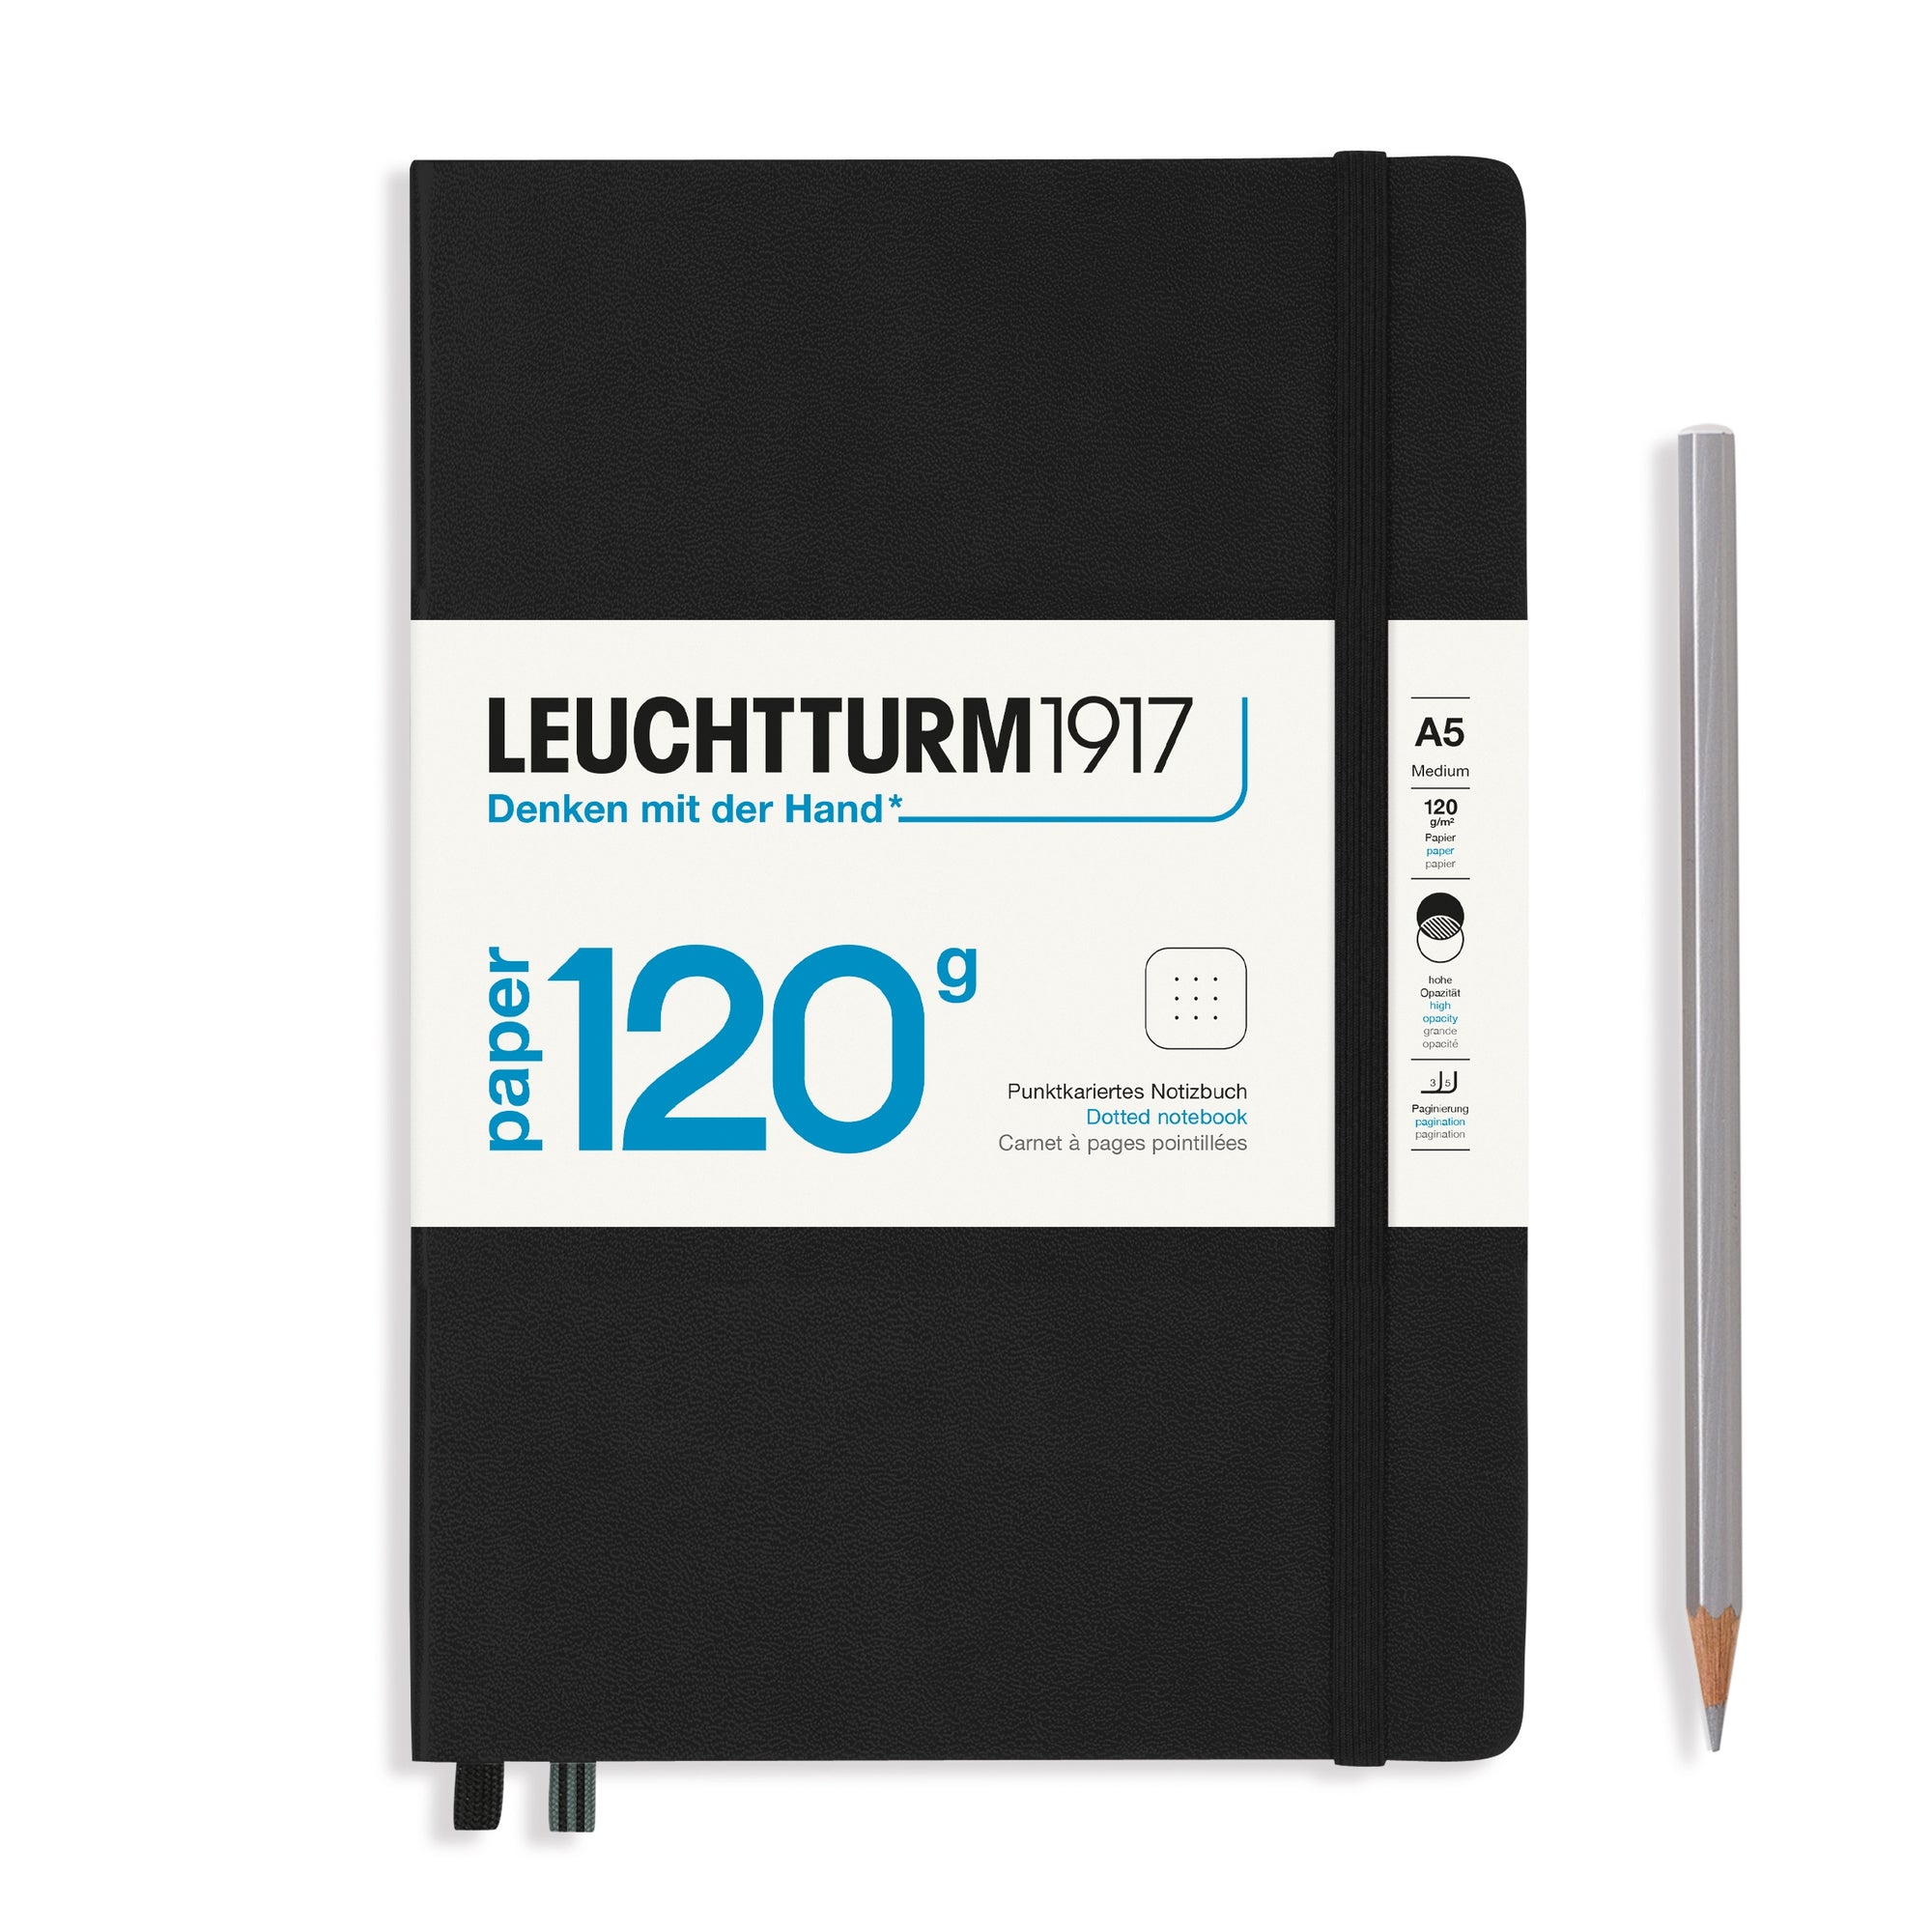 Leuchtturm1917, 120g Notebook Edition, A5, 203 Pages, Black